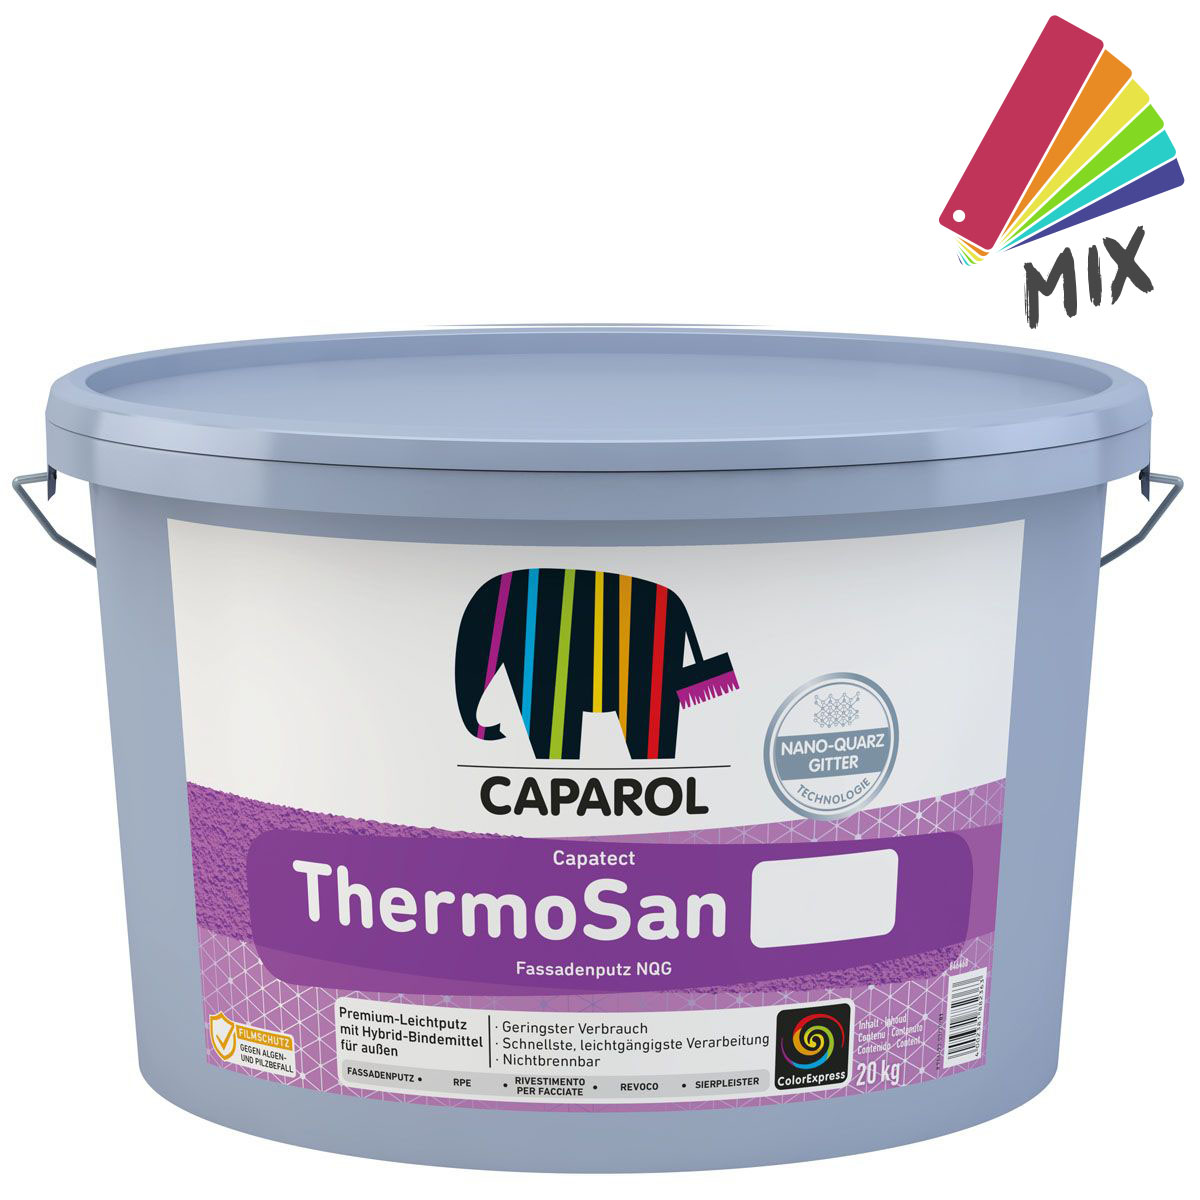 Caparol Capatect Thermosan Fassadenputz NQG K30 (3mm) 20kg, MIX